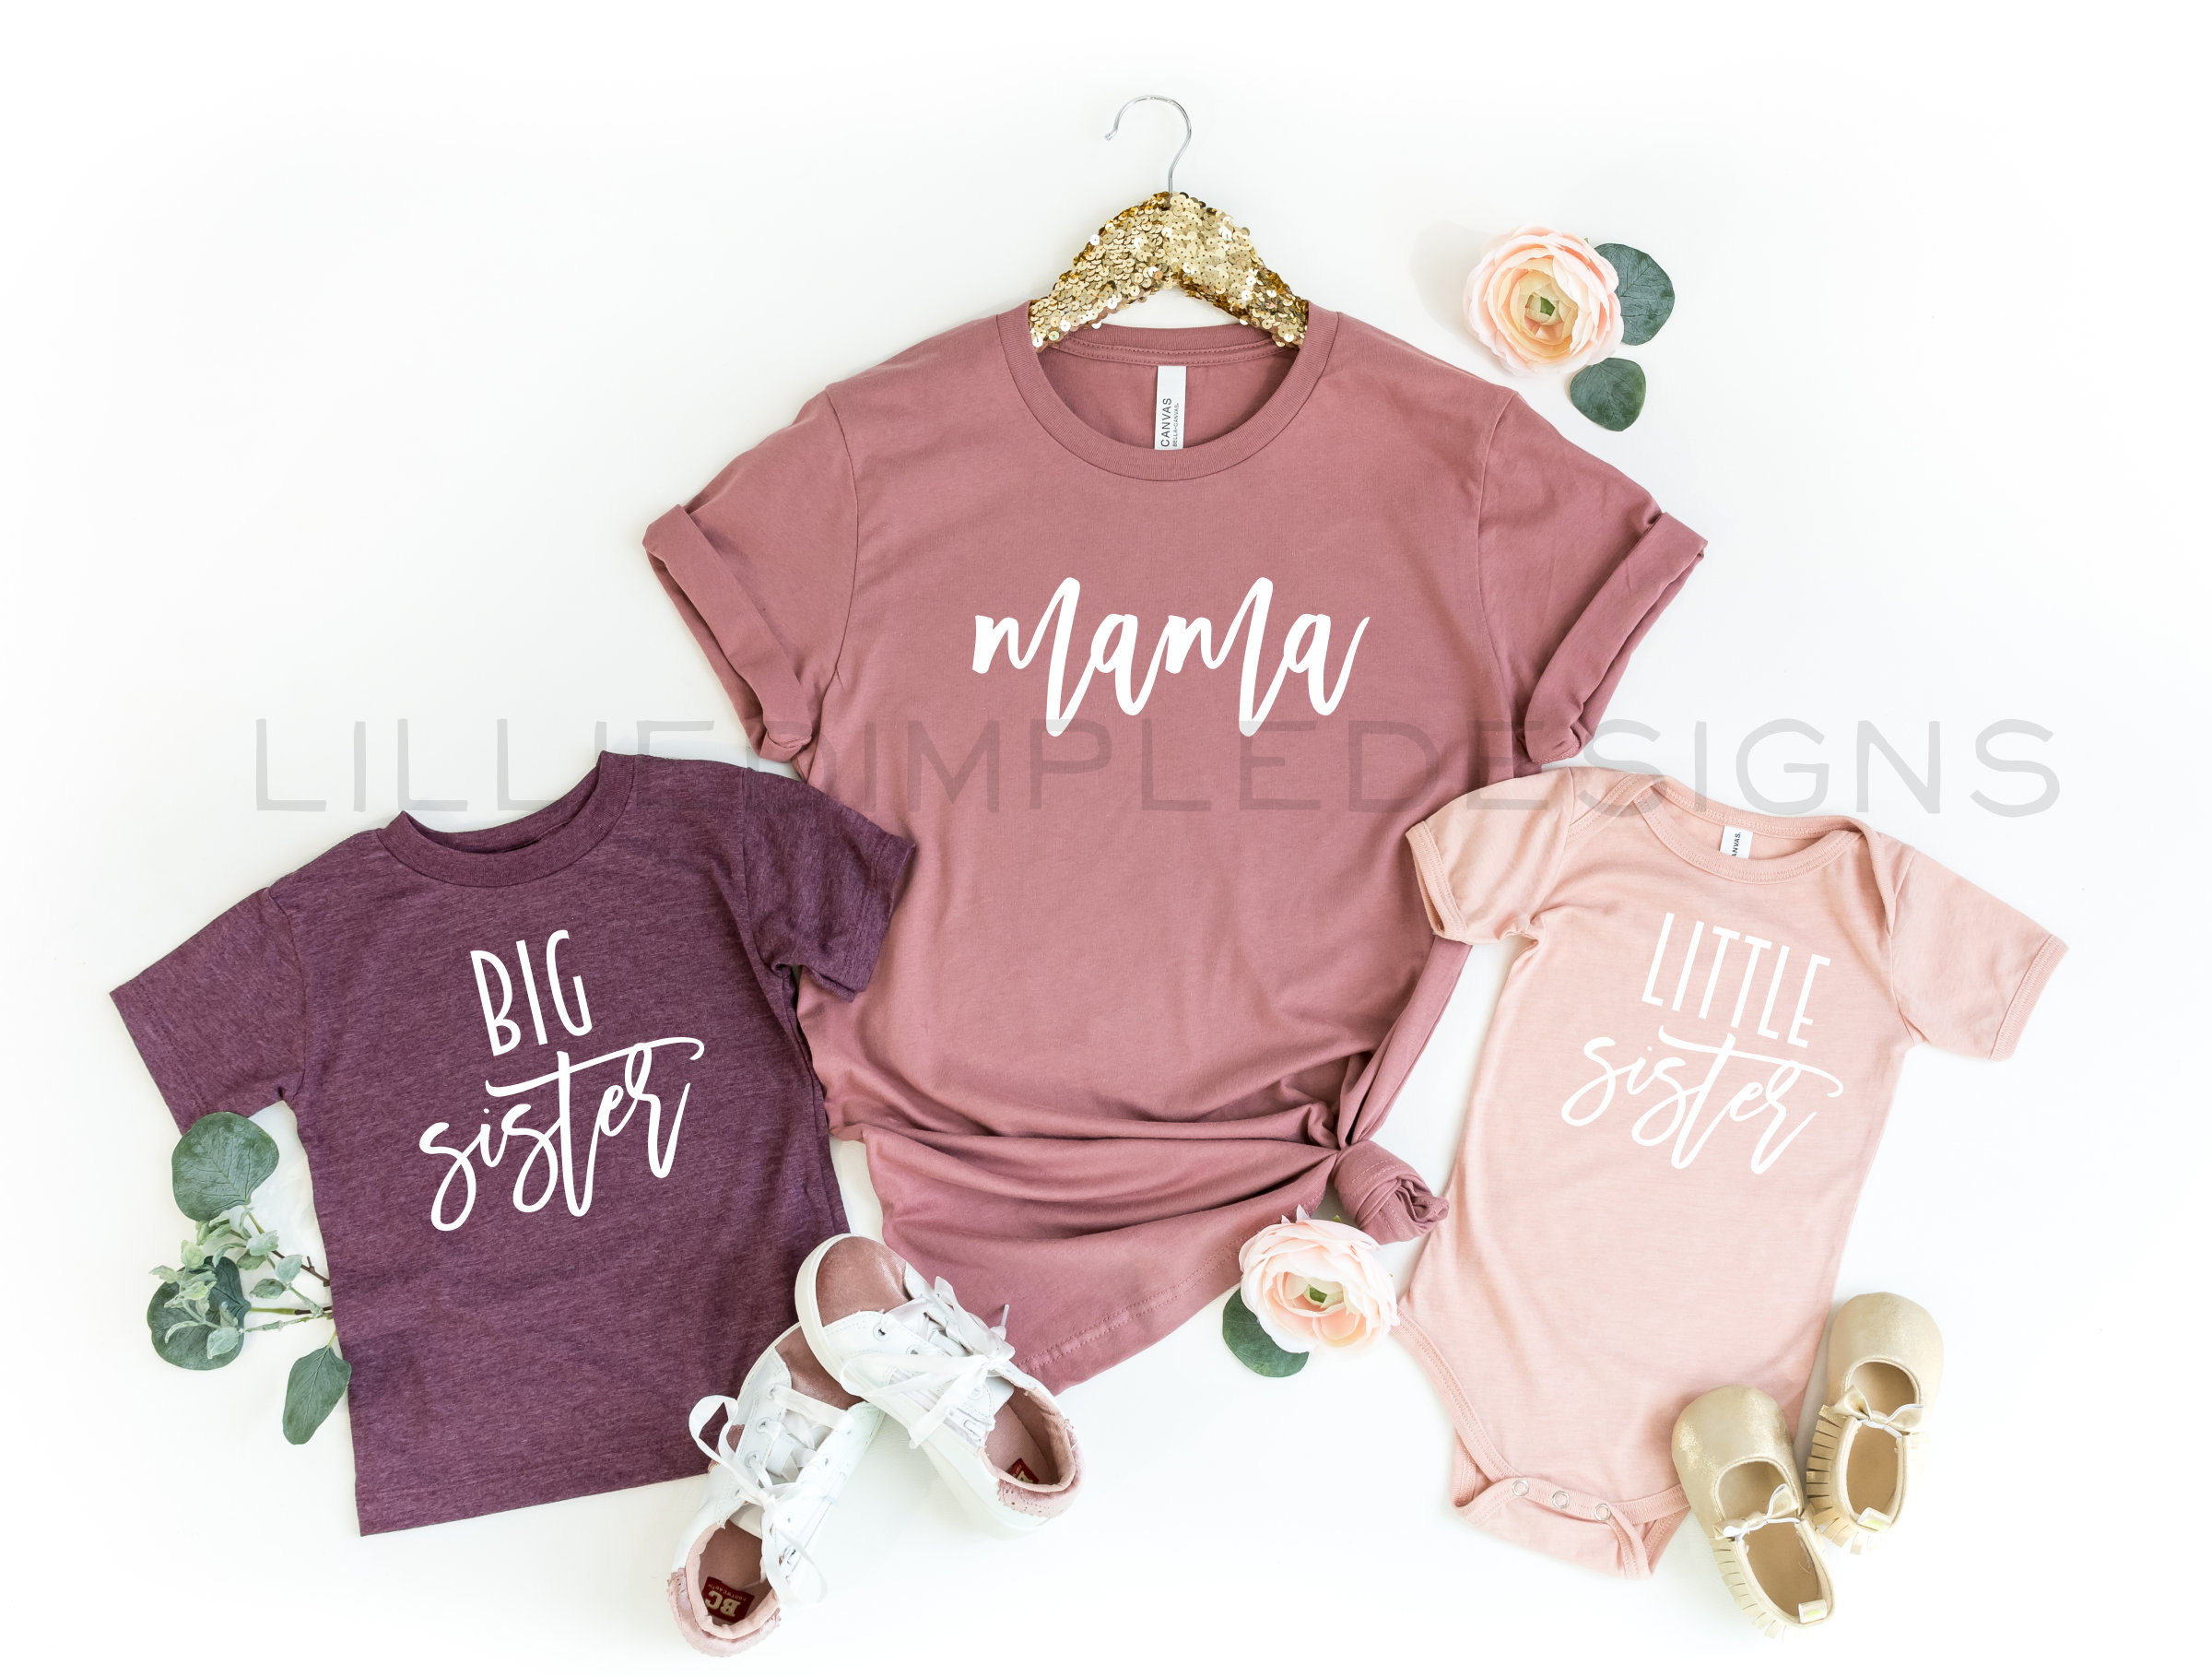 Big Sister - Original - Child Shirt – Little Mama Shirt Shop LLC